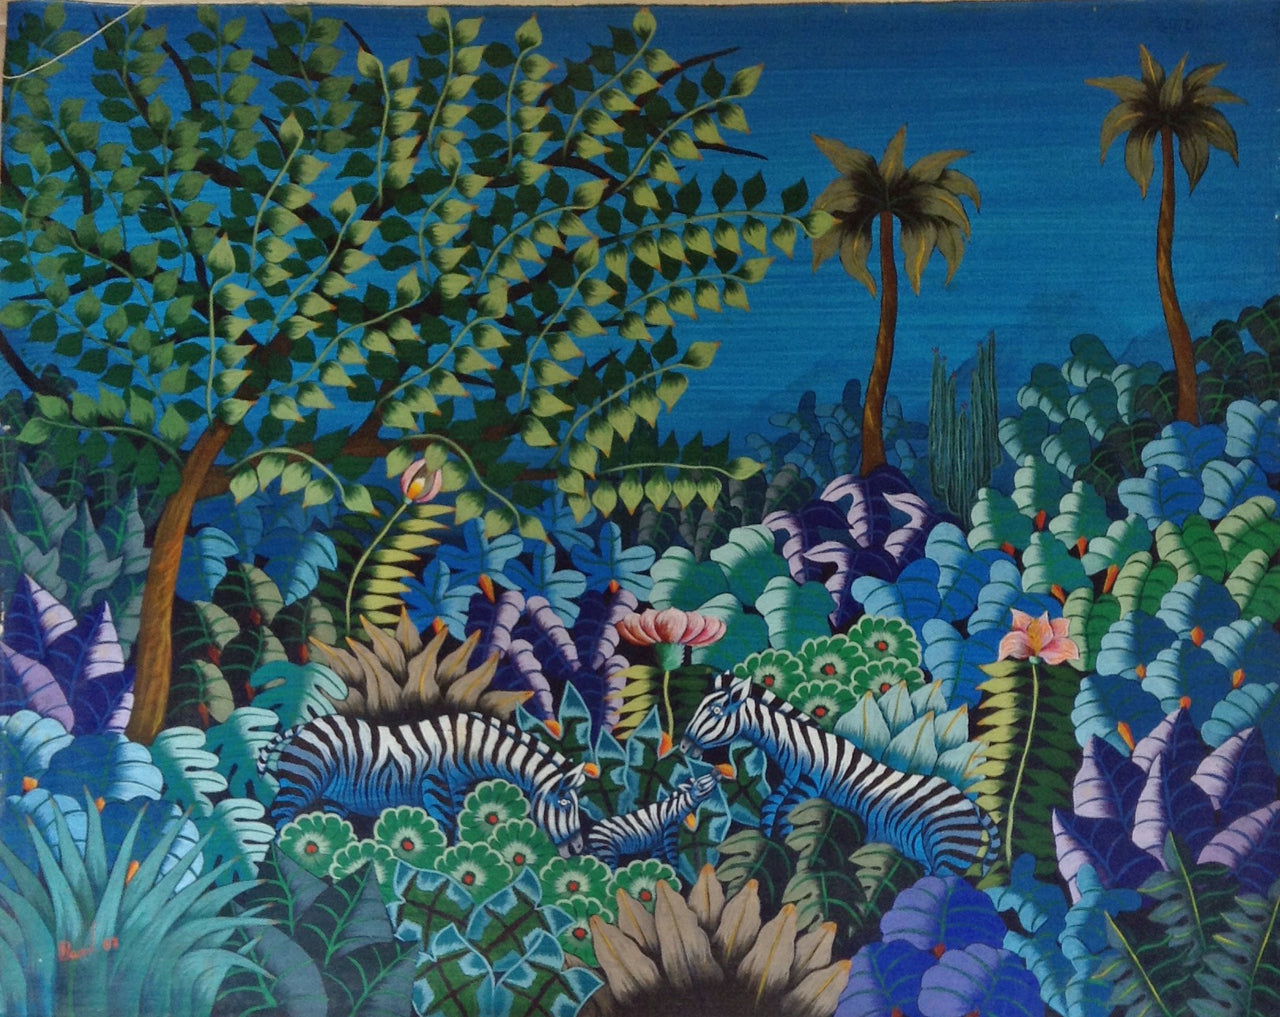 Andre Naval 24"x30" Jungle Scene Oil 1987 on Canvas #1-10-10MFN